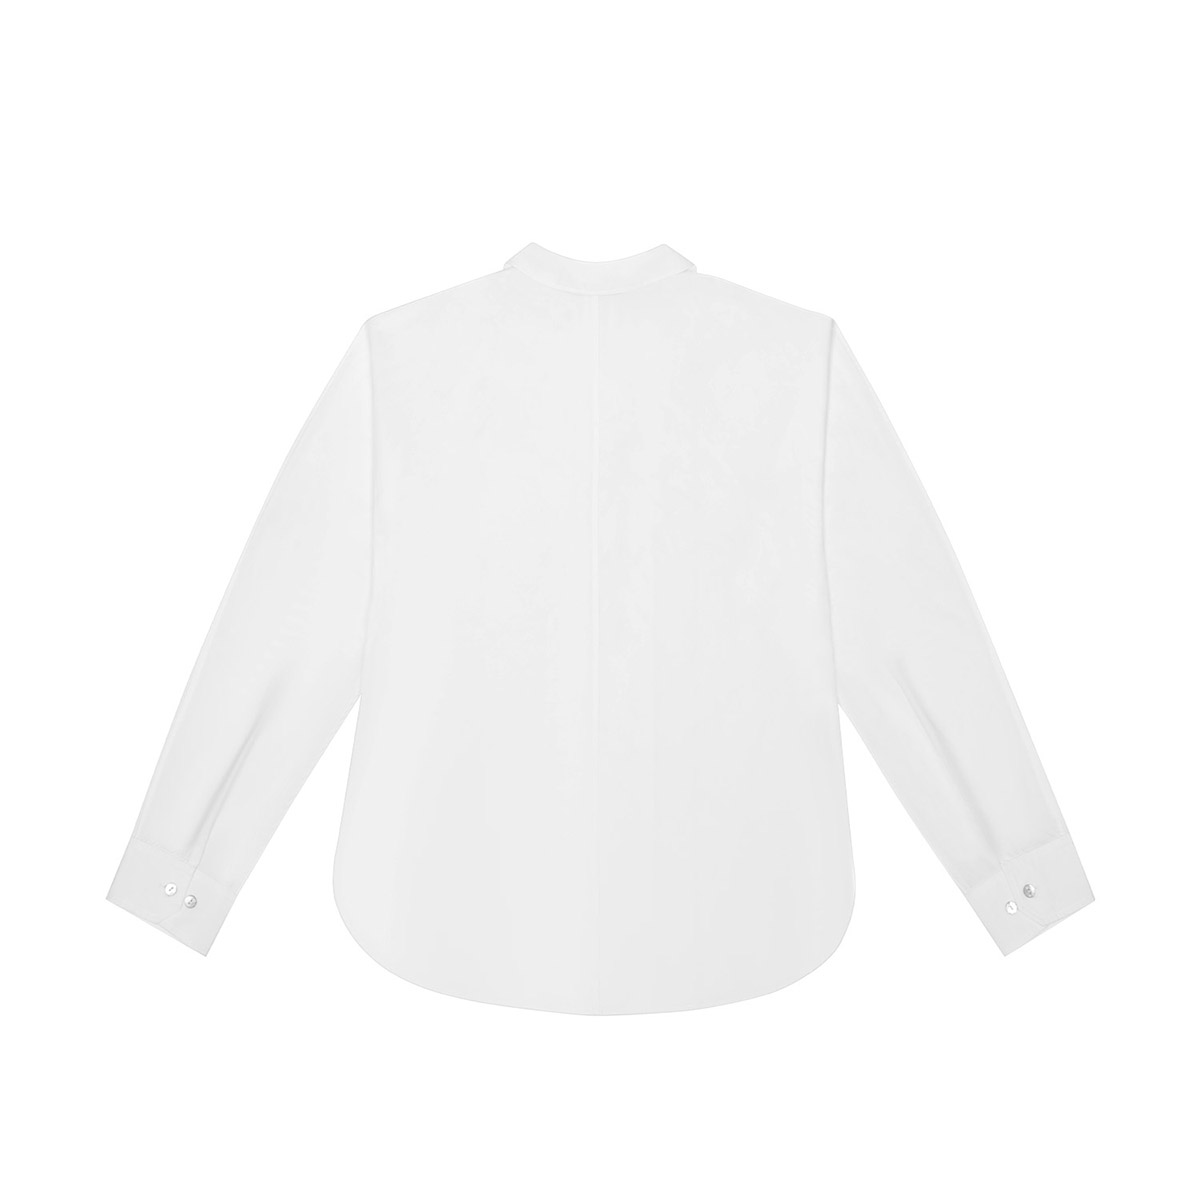 oalc COTTON CLASSIC COLLAR SHIRT 코튼 클래식 카라 셔츠 (White)